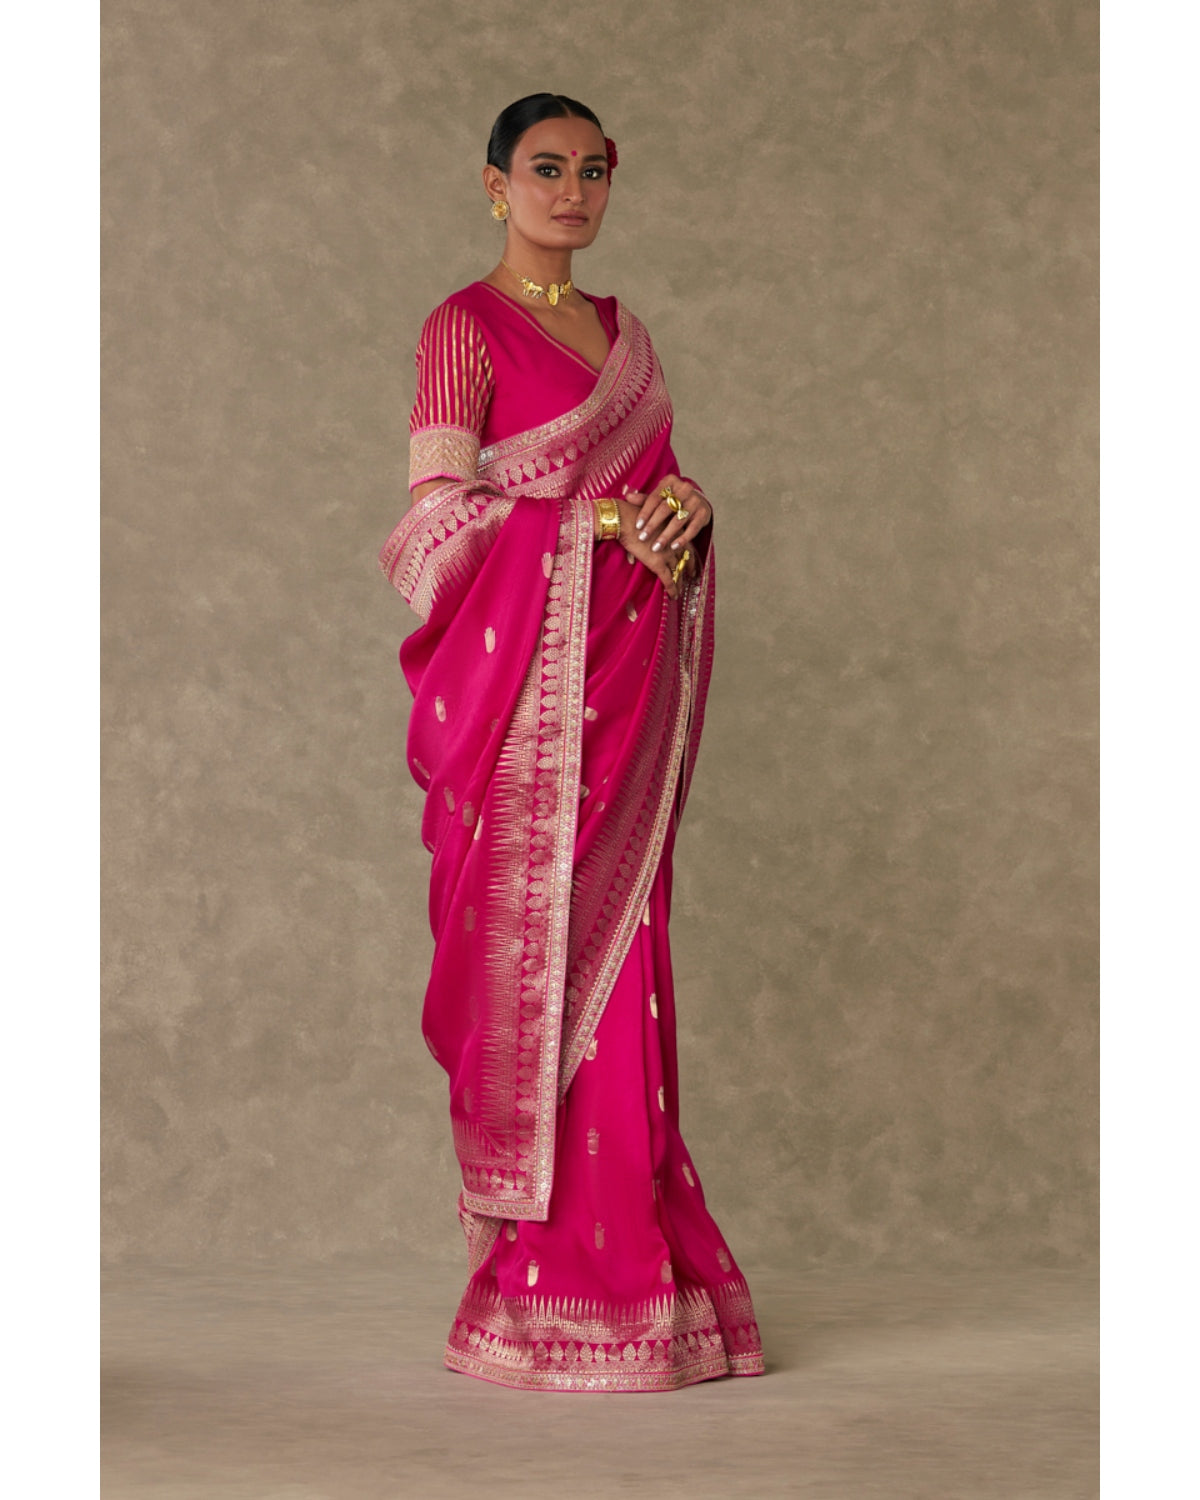 kundan haath phool | Wedding mehndi designs, Bridal mehndi designs, Dulhan  mehndi designs